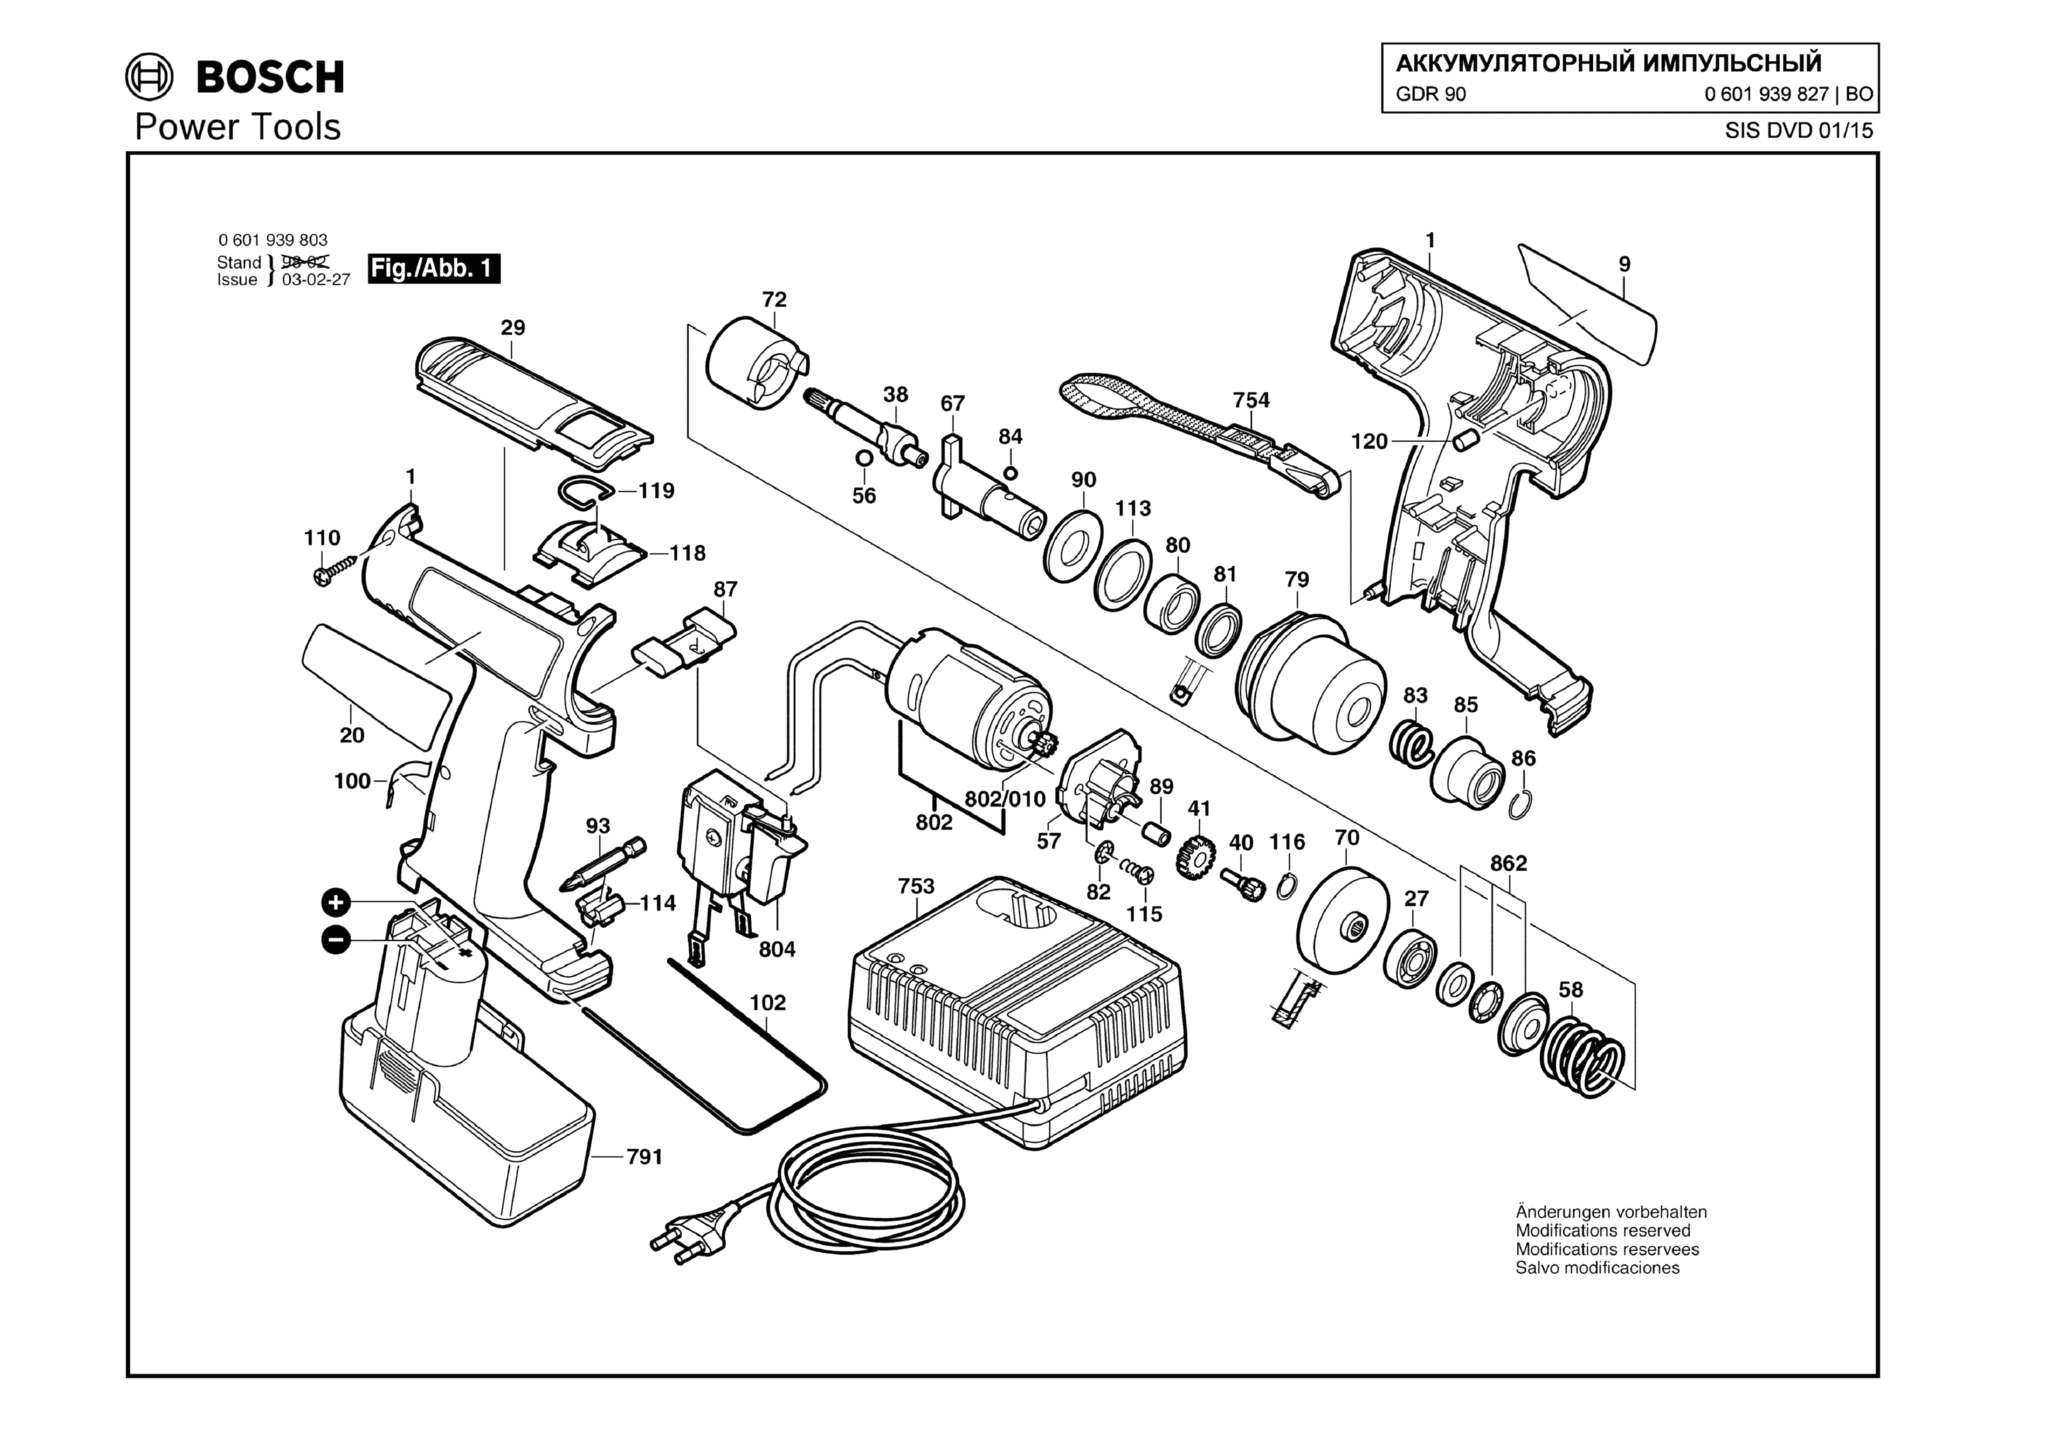 Запчасти, схема и деталировка Bosch GDR 90 (ТИП 0601939827)